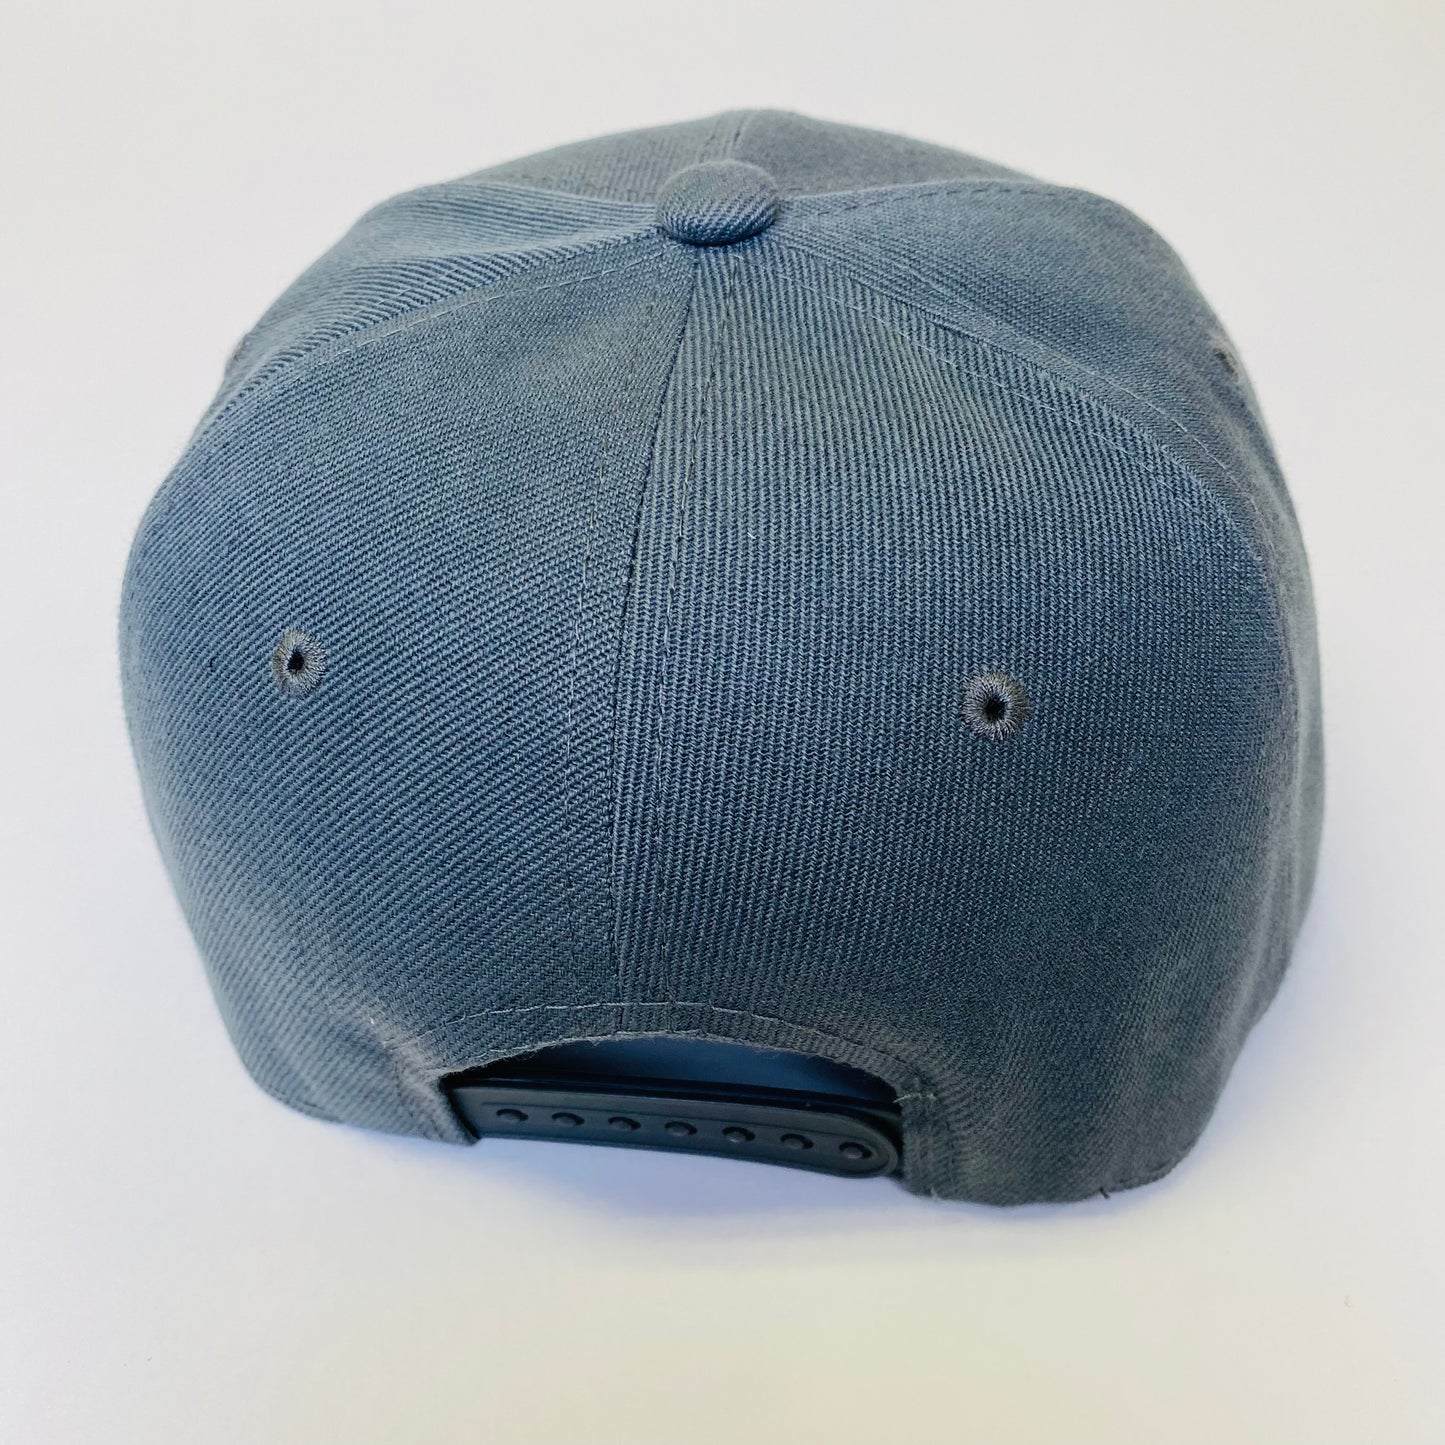 Plain Snapback 5 Panel Hat